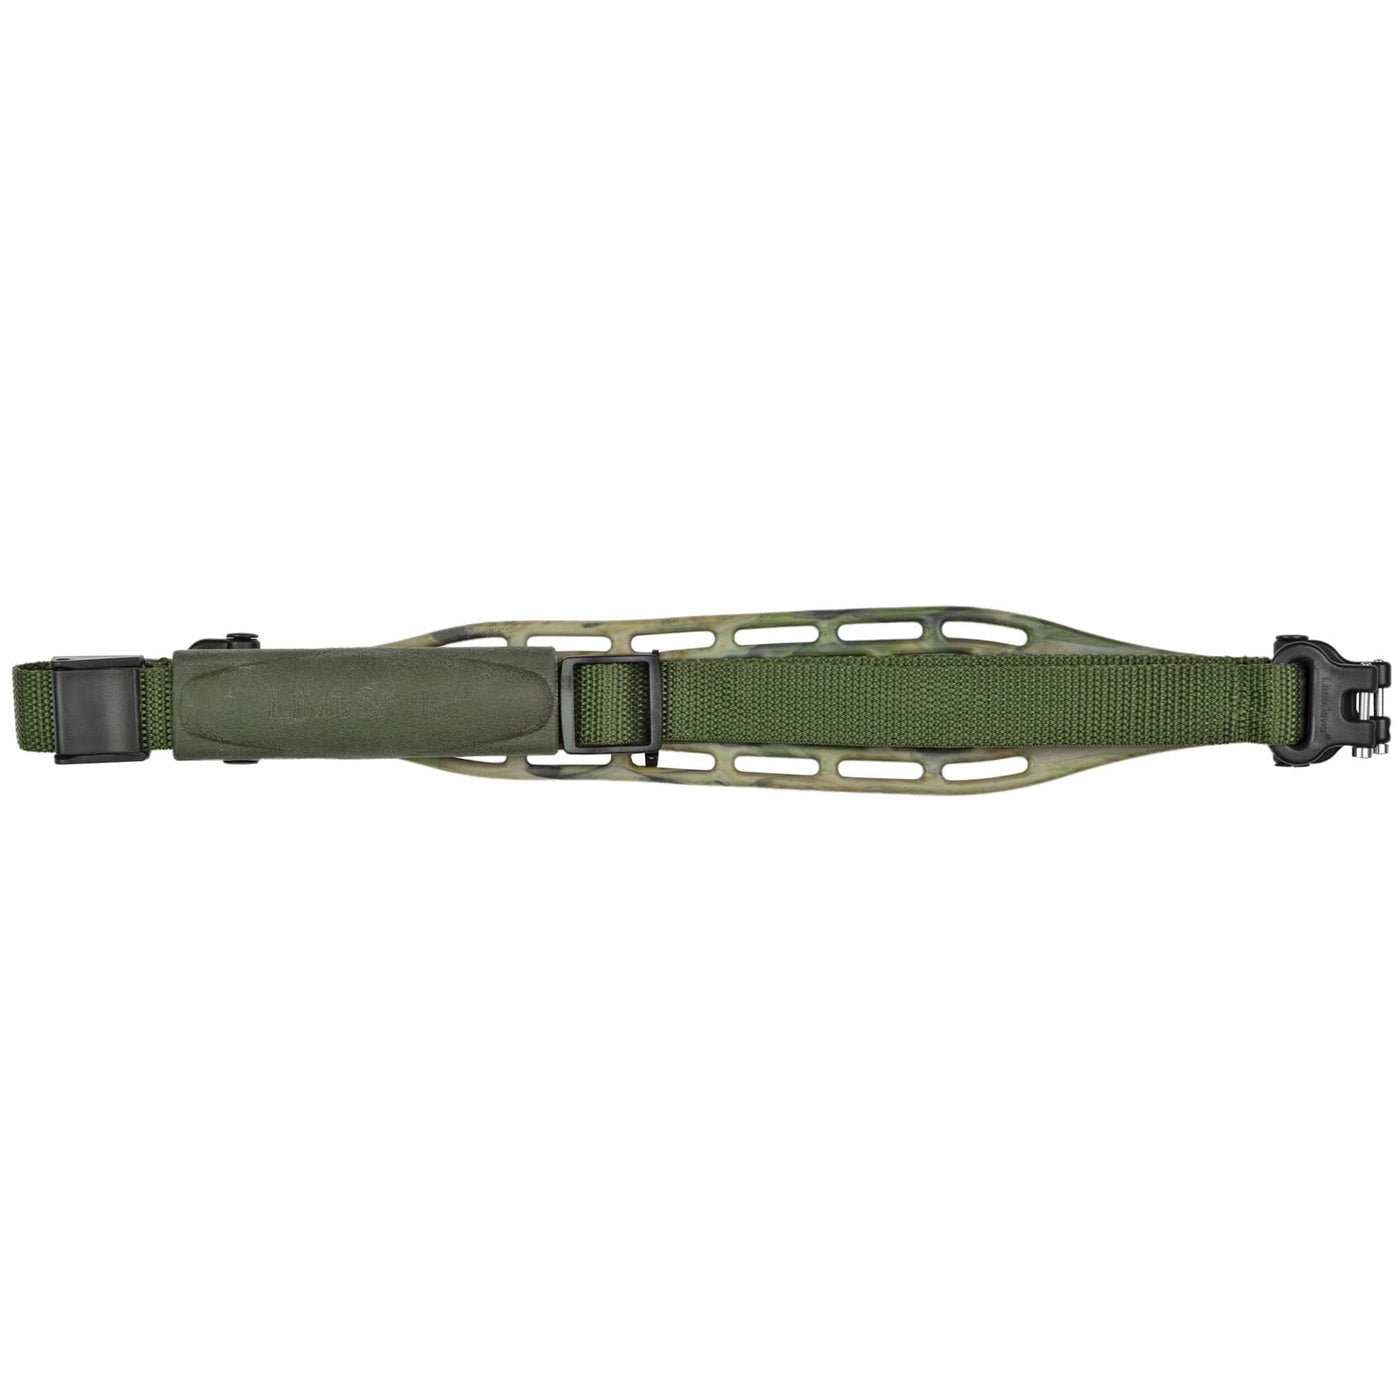 Limbsaver Limbsaver Kodiak-air Rifle Sling O/d Green W/ Swivels Od green Shooting Gear and Acc